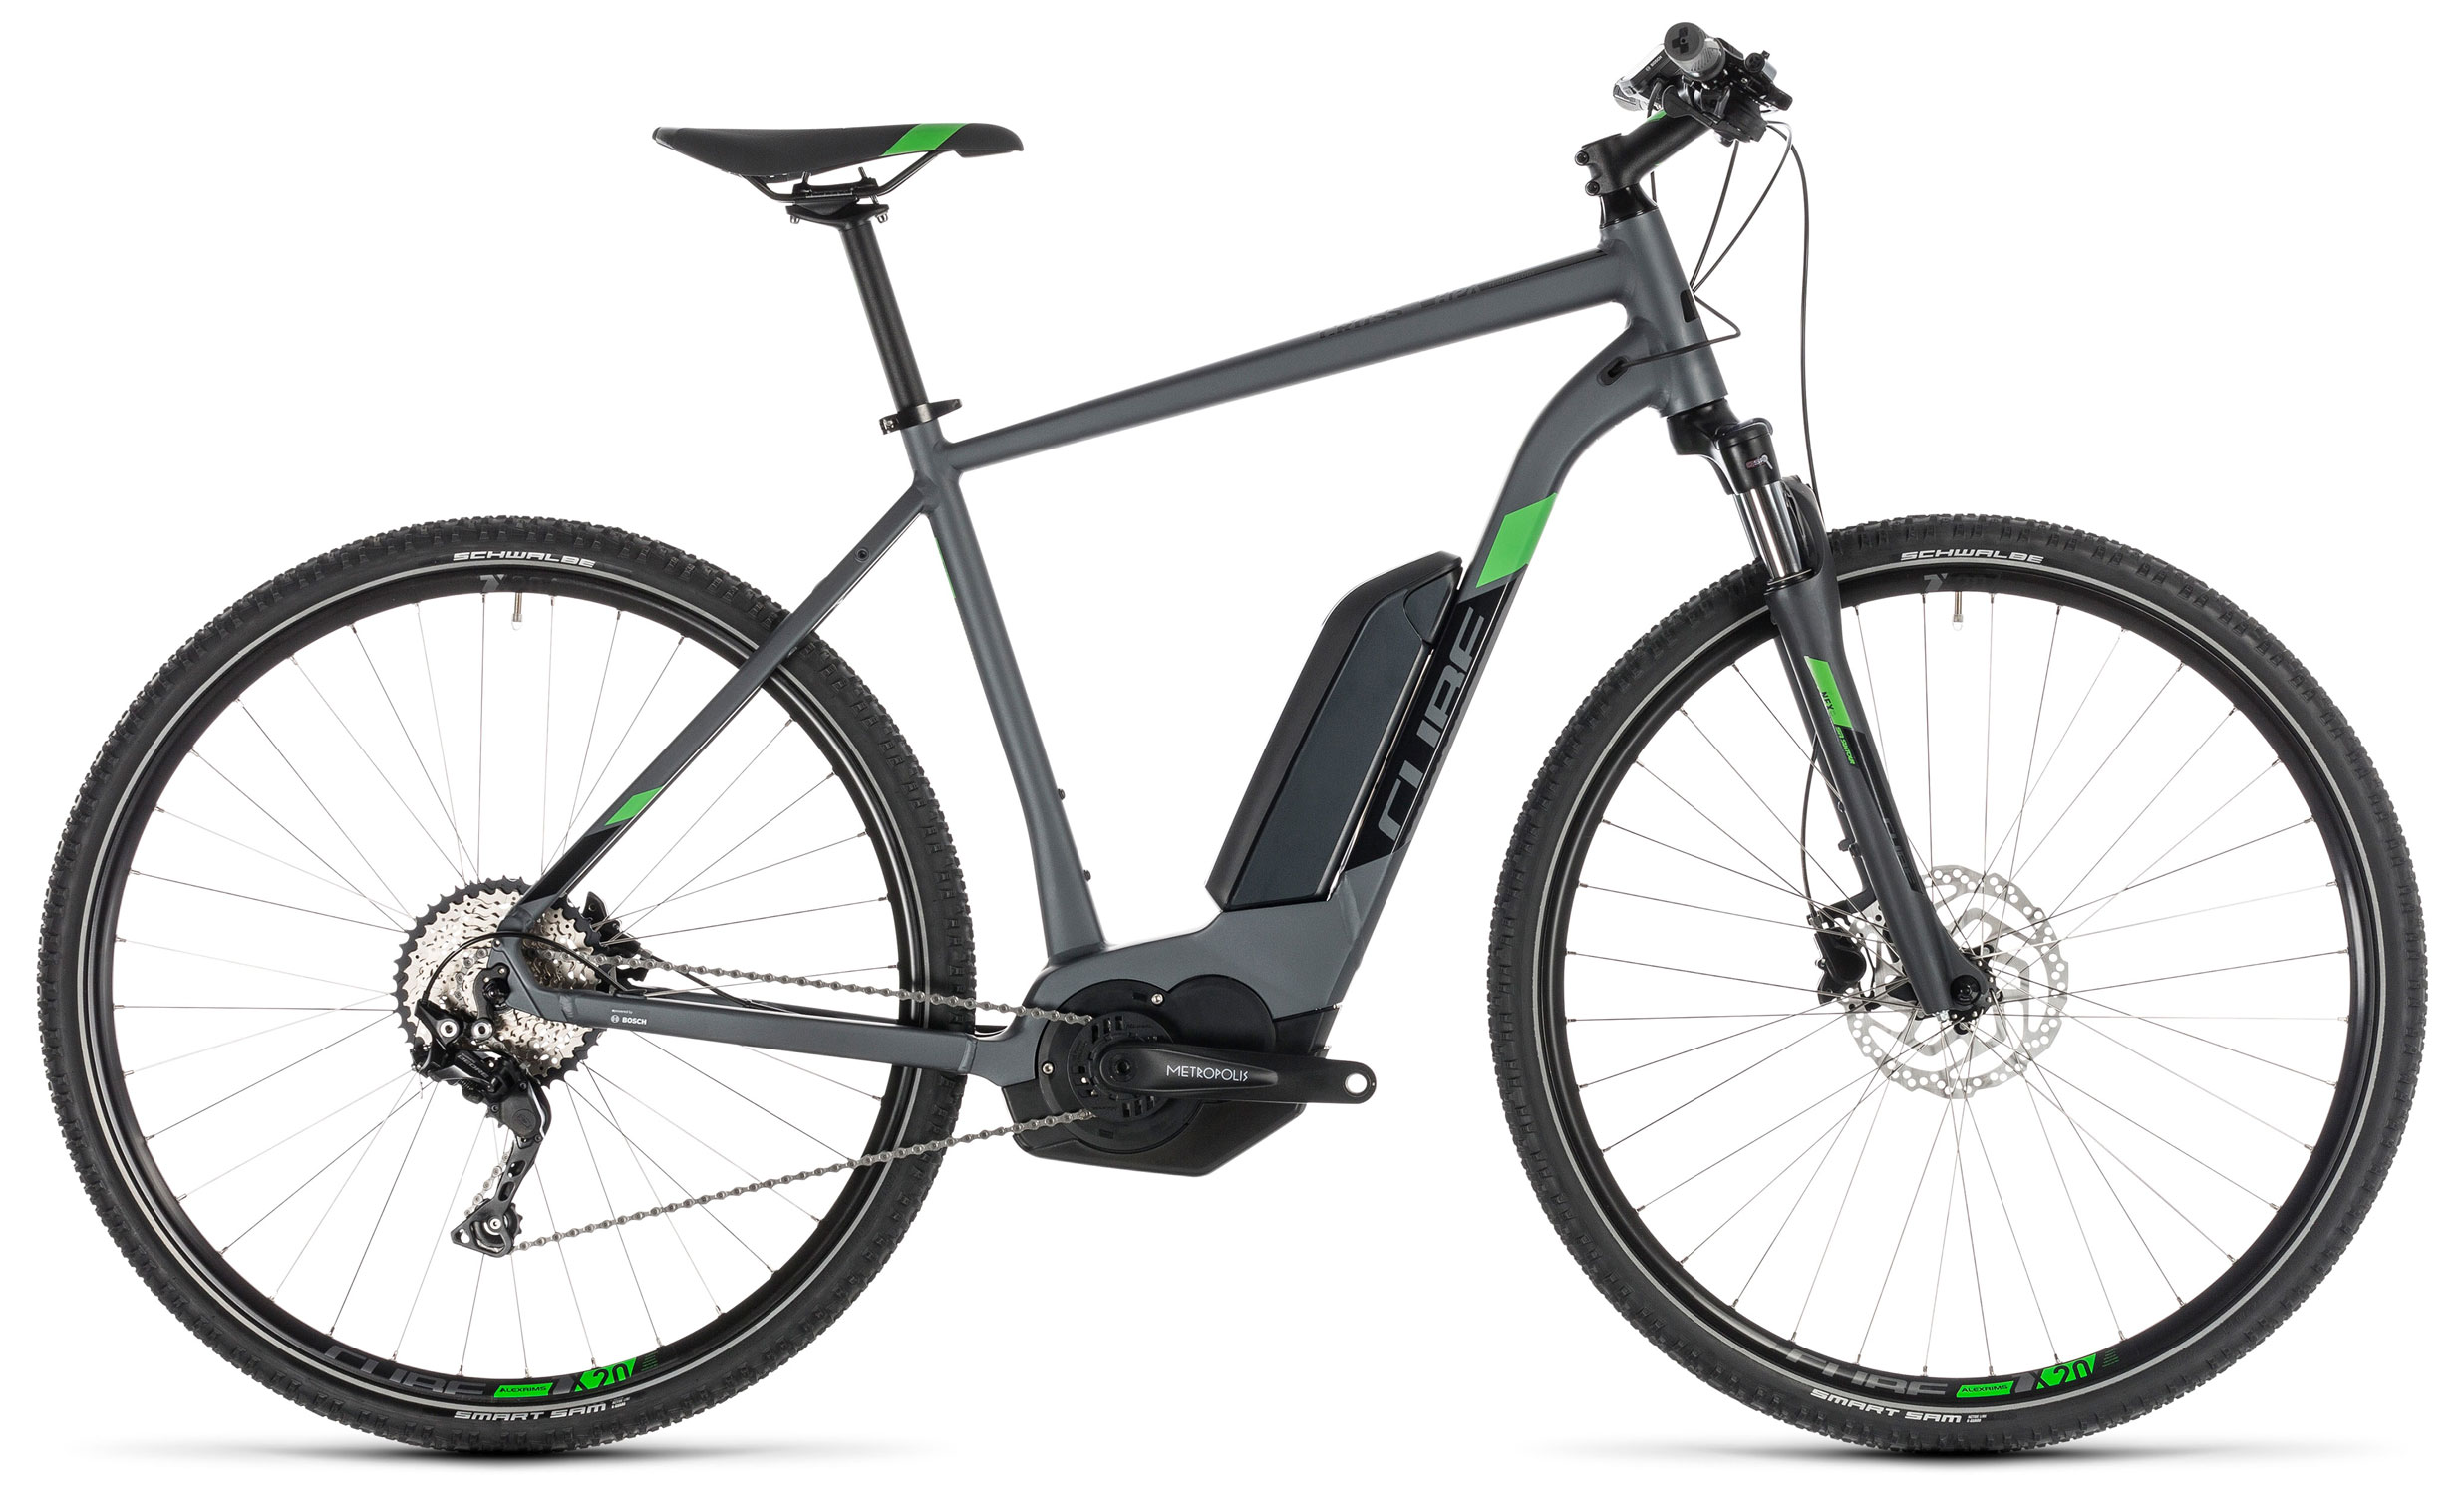  Отзывы о Электровелосипеде Cube Cross Hybrid Pro 400 2019